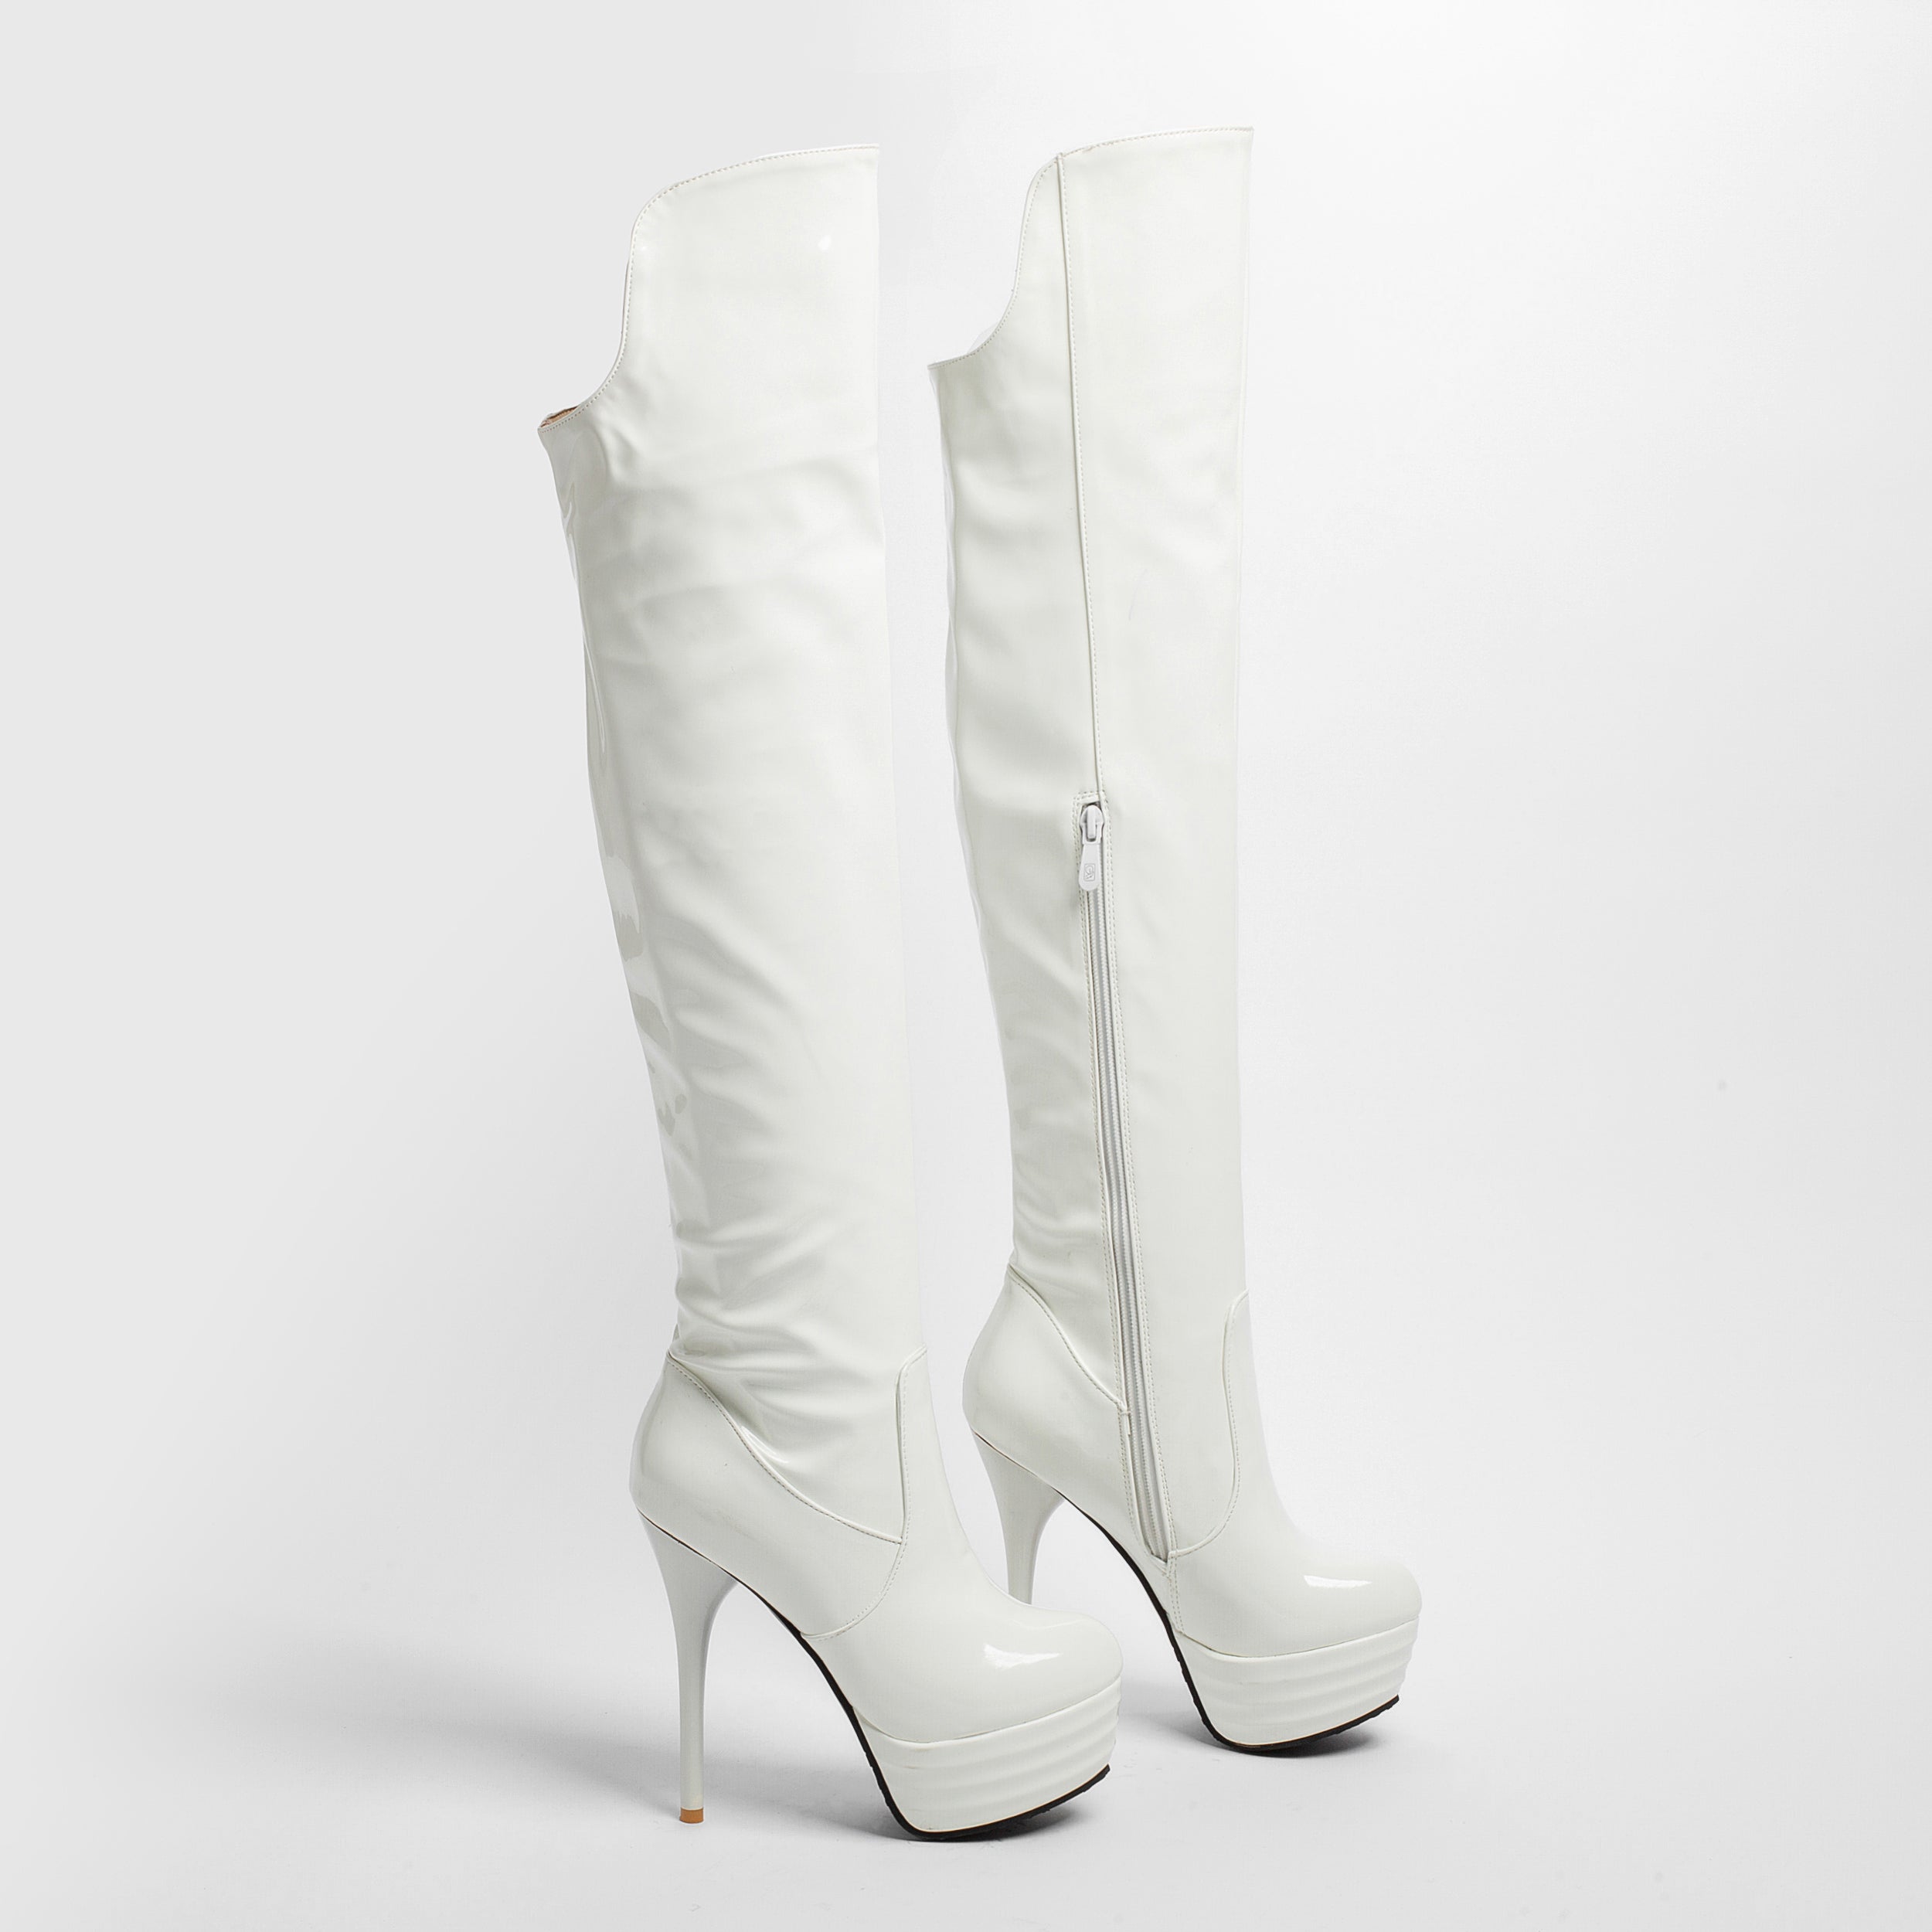 Bigsizeheels Waterproof covered knee-high heel boots - White freeshipping - bigsizeheel®-size5-size15 -All Plus Sizes Available!